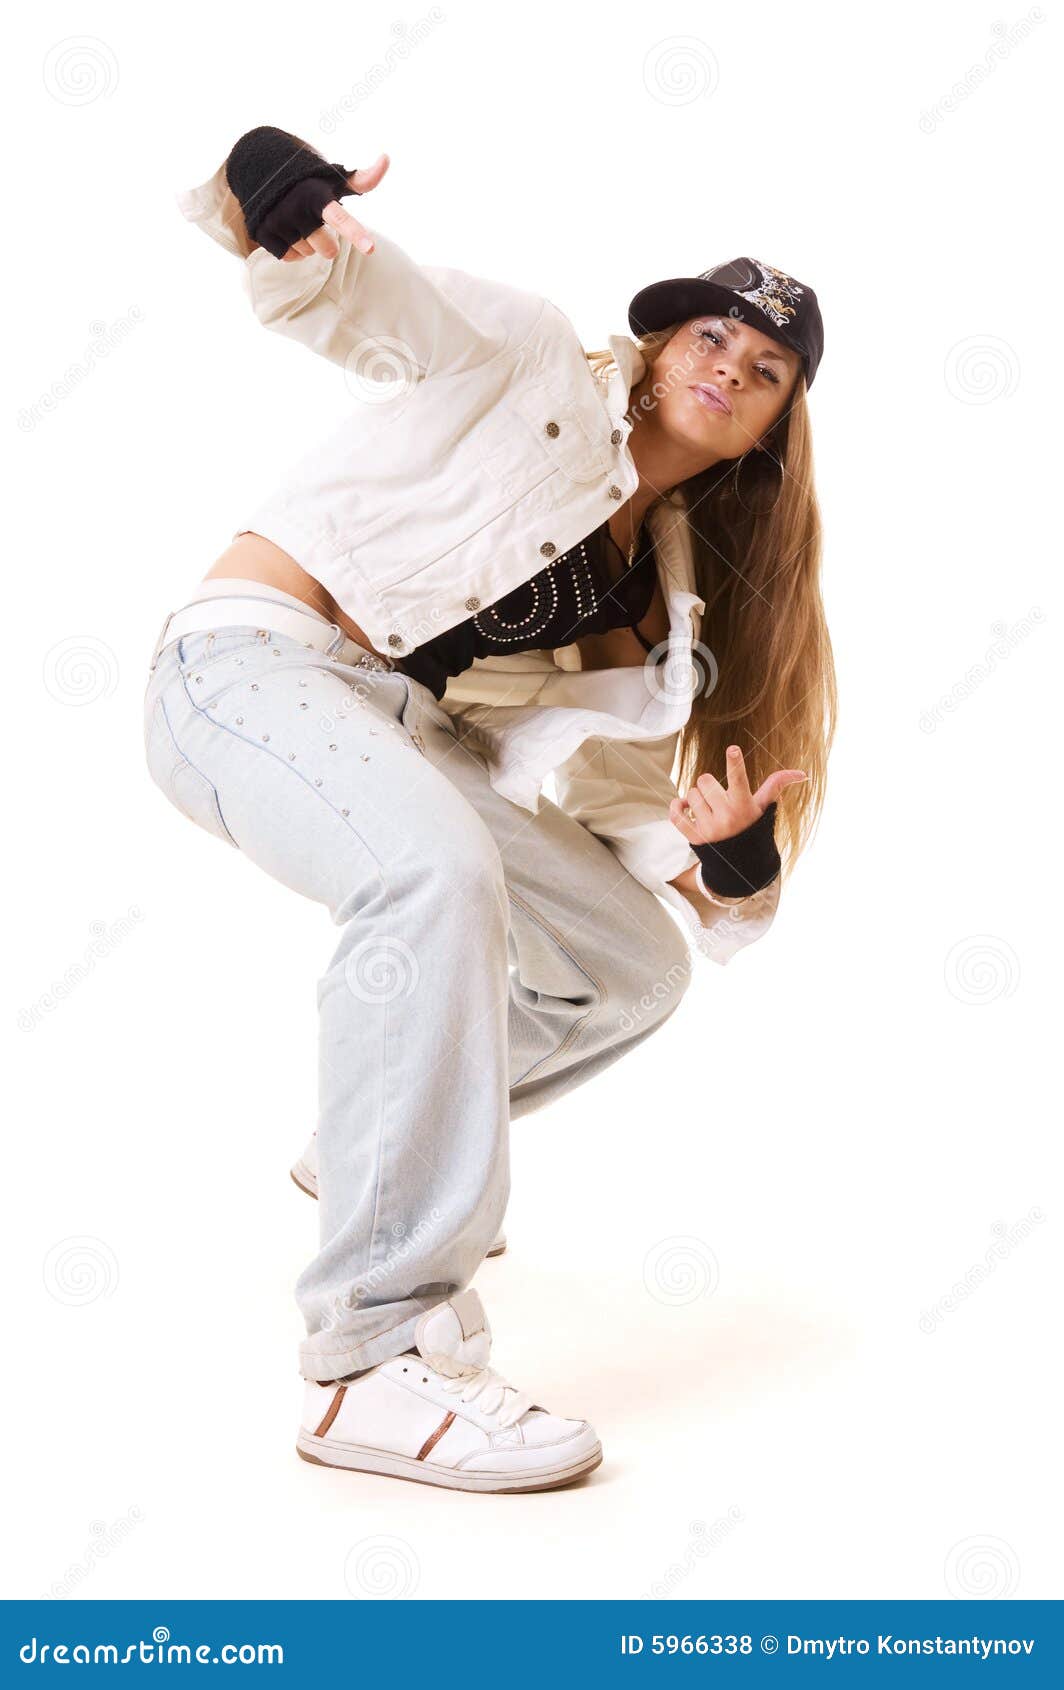 Young Girl Hip Hop Dancer Posing Stock Photo 416434474 | Shutterstock